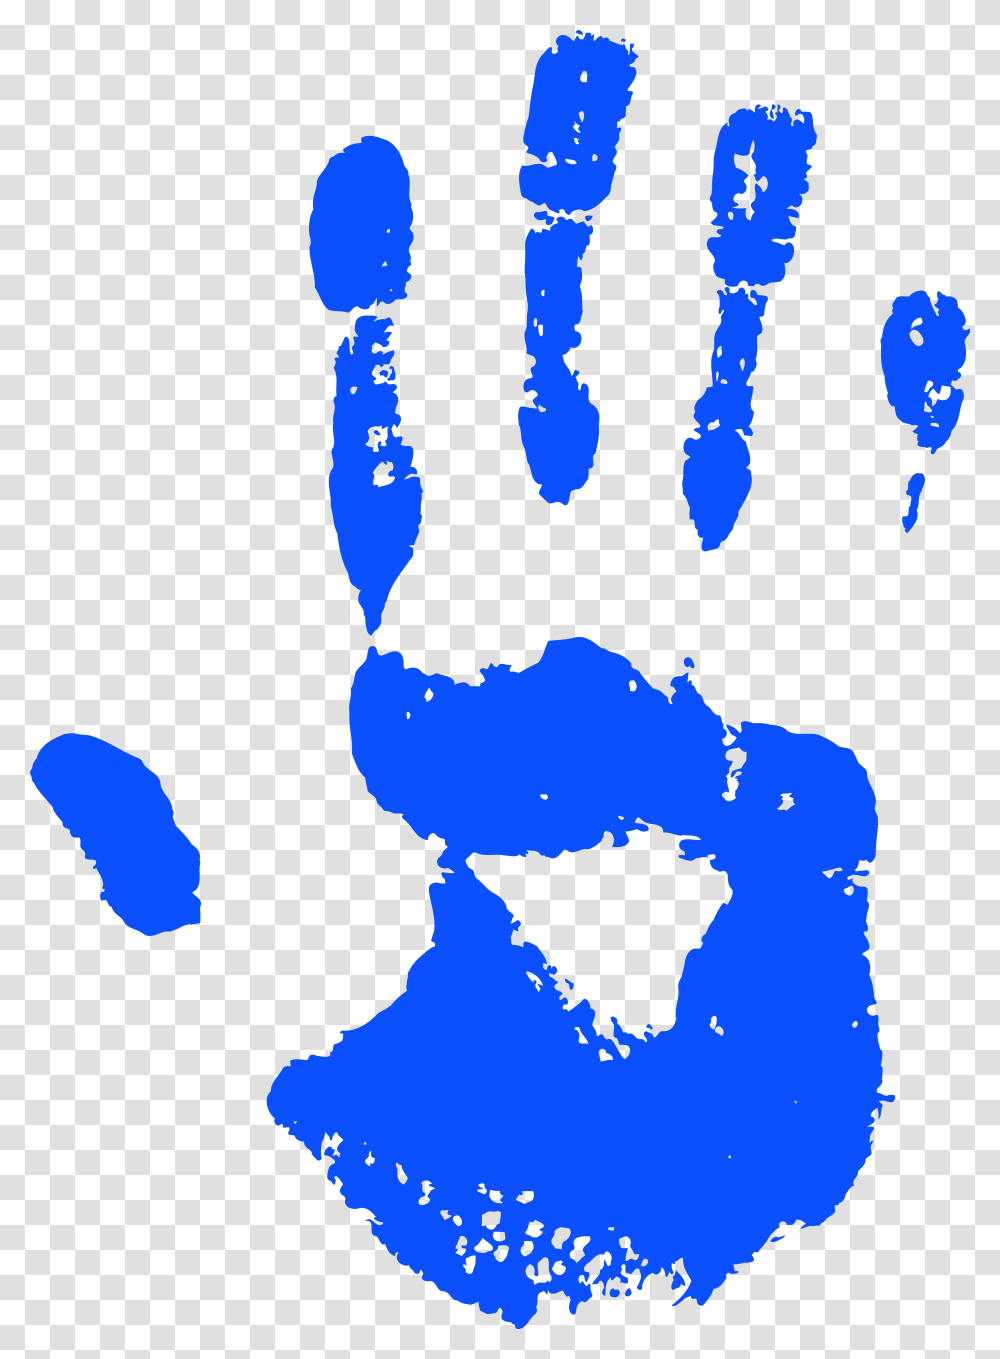 Blue Handprint Free Clip Art Image Background Handprint, Rock, Outdoors Transparent Png